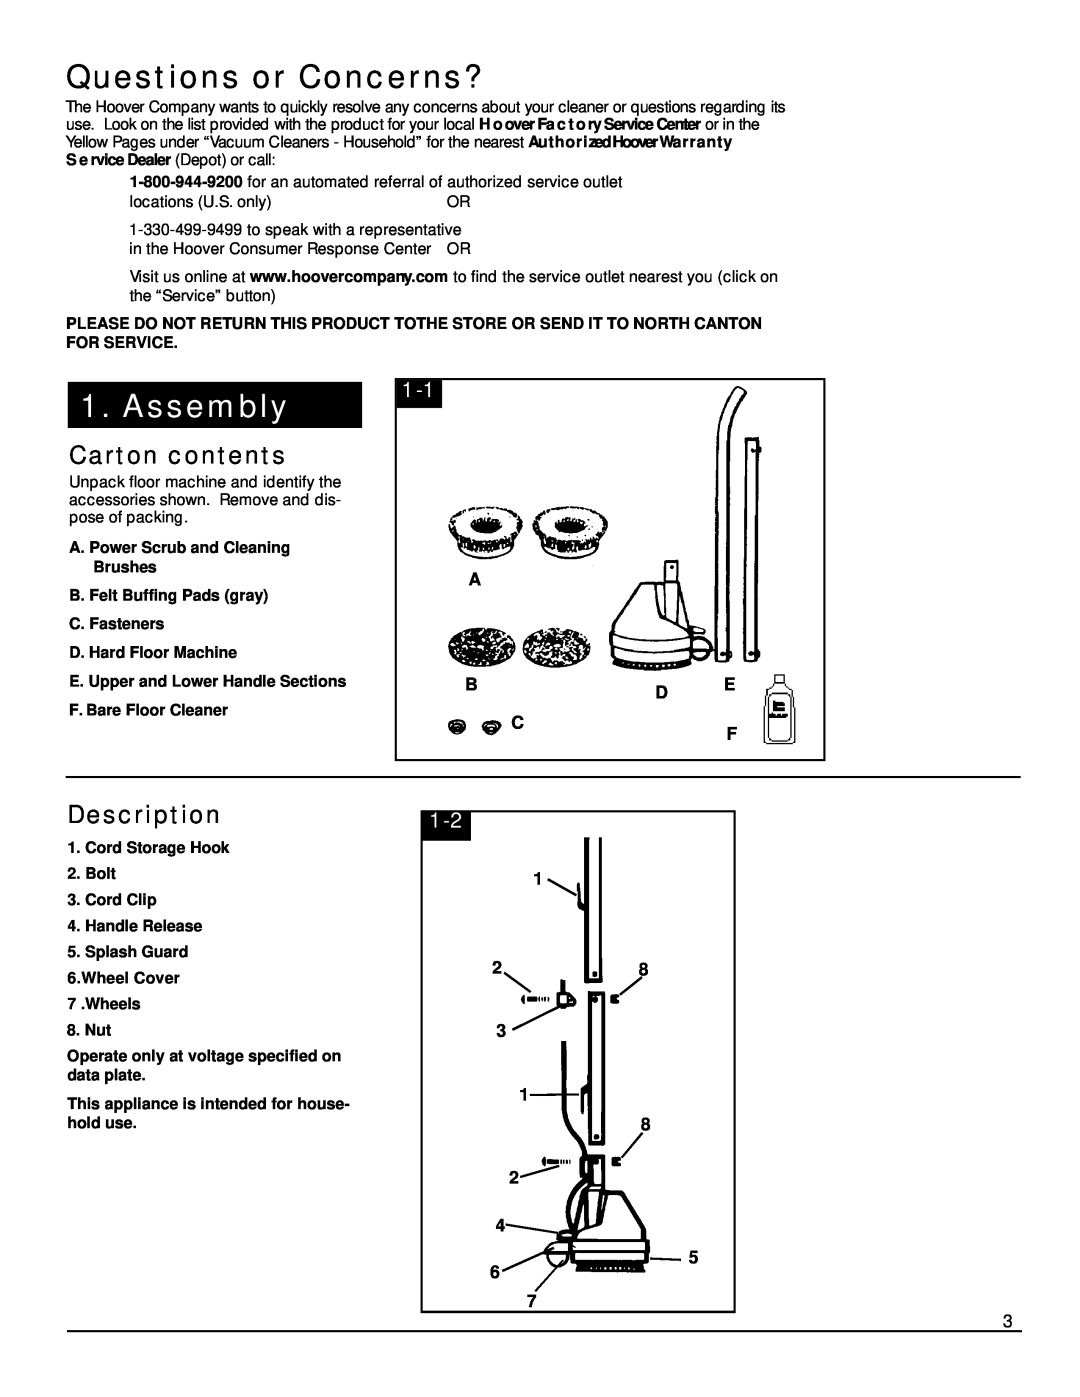 Hoover Hard Floor Machine owner manual Questions or Concerns?, Assembly, Carton contents, Description, A Bd E 